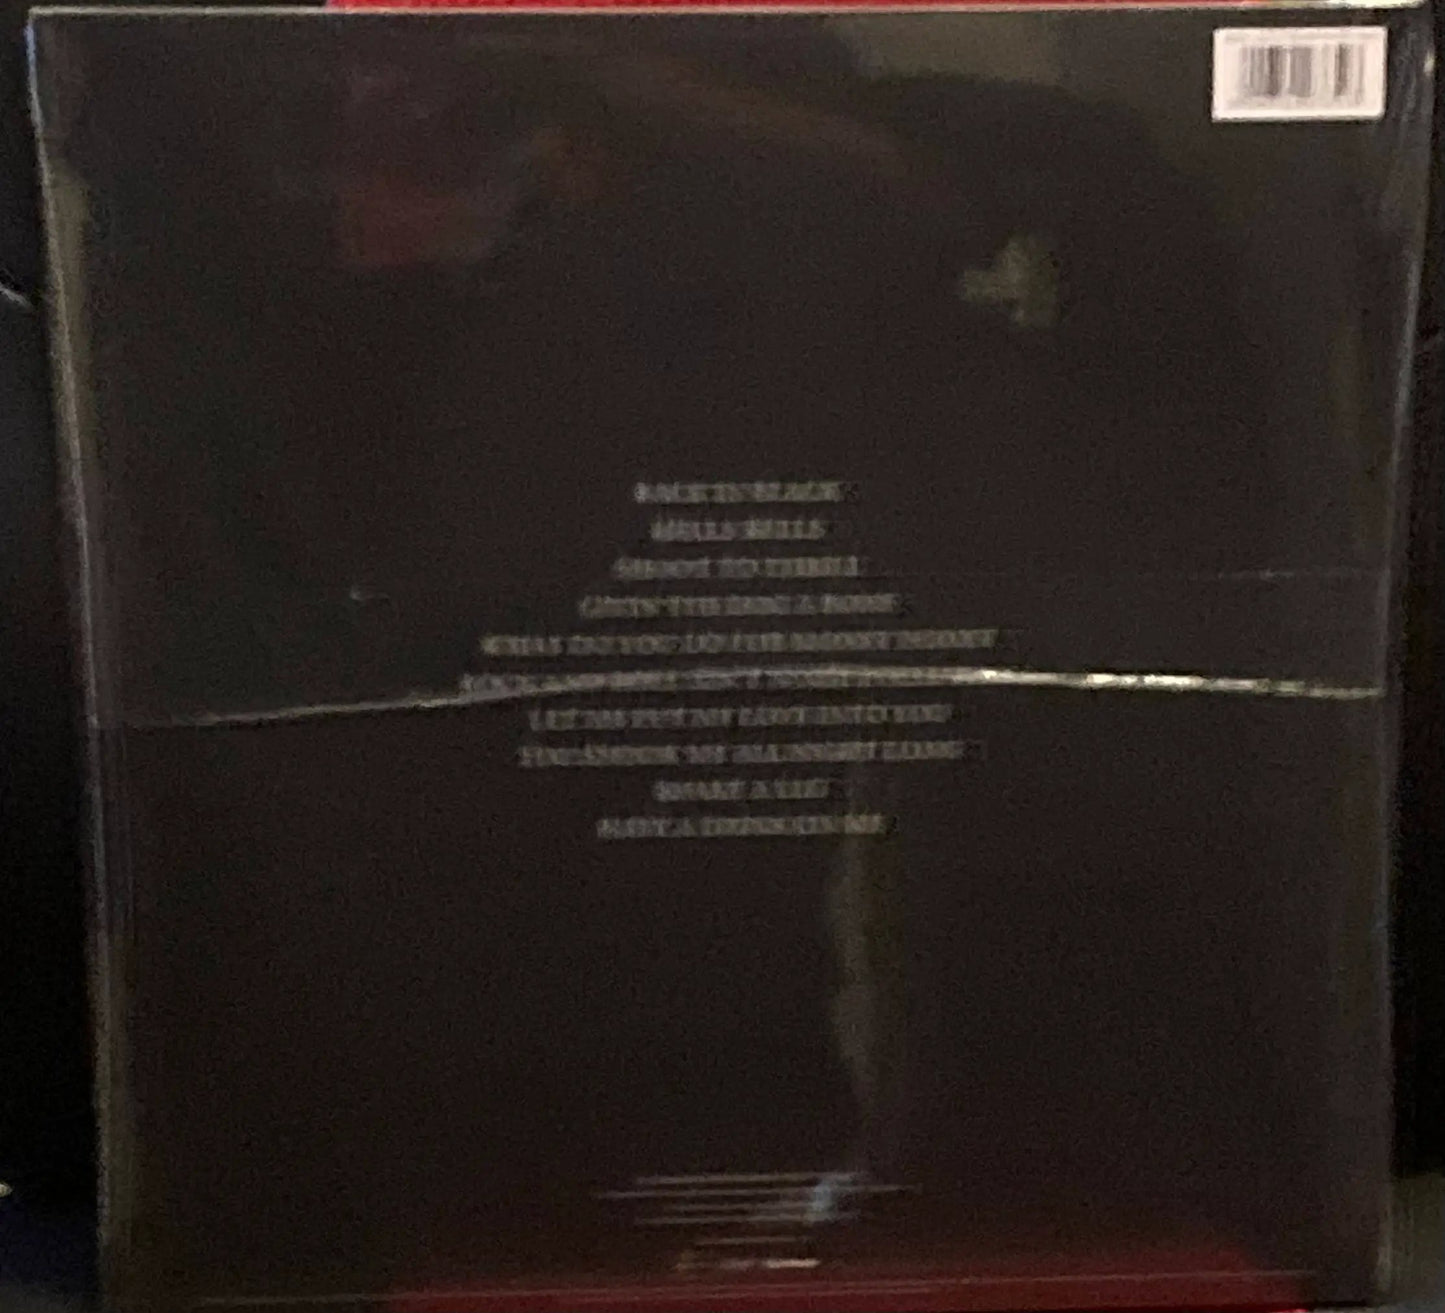 The back of AC/DC - Back in Black on vinyl